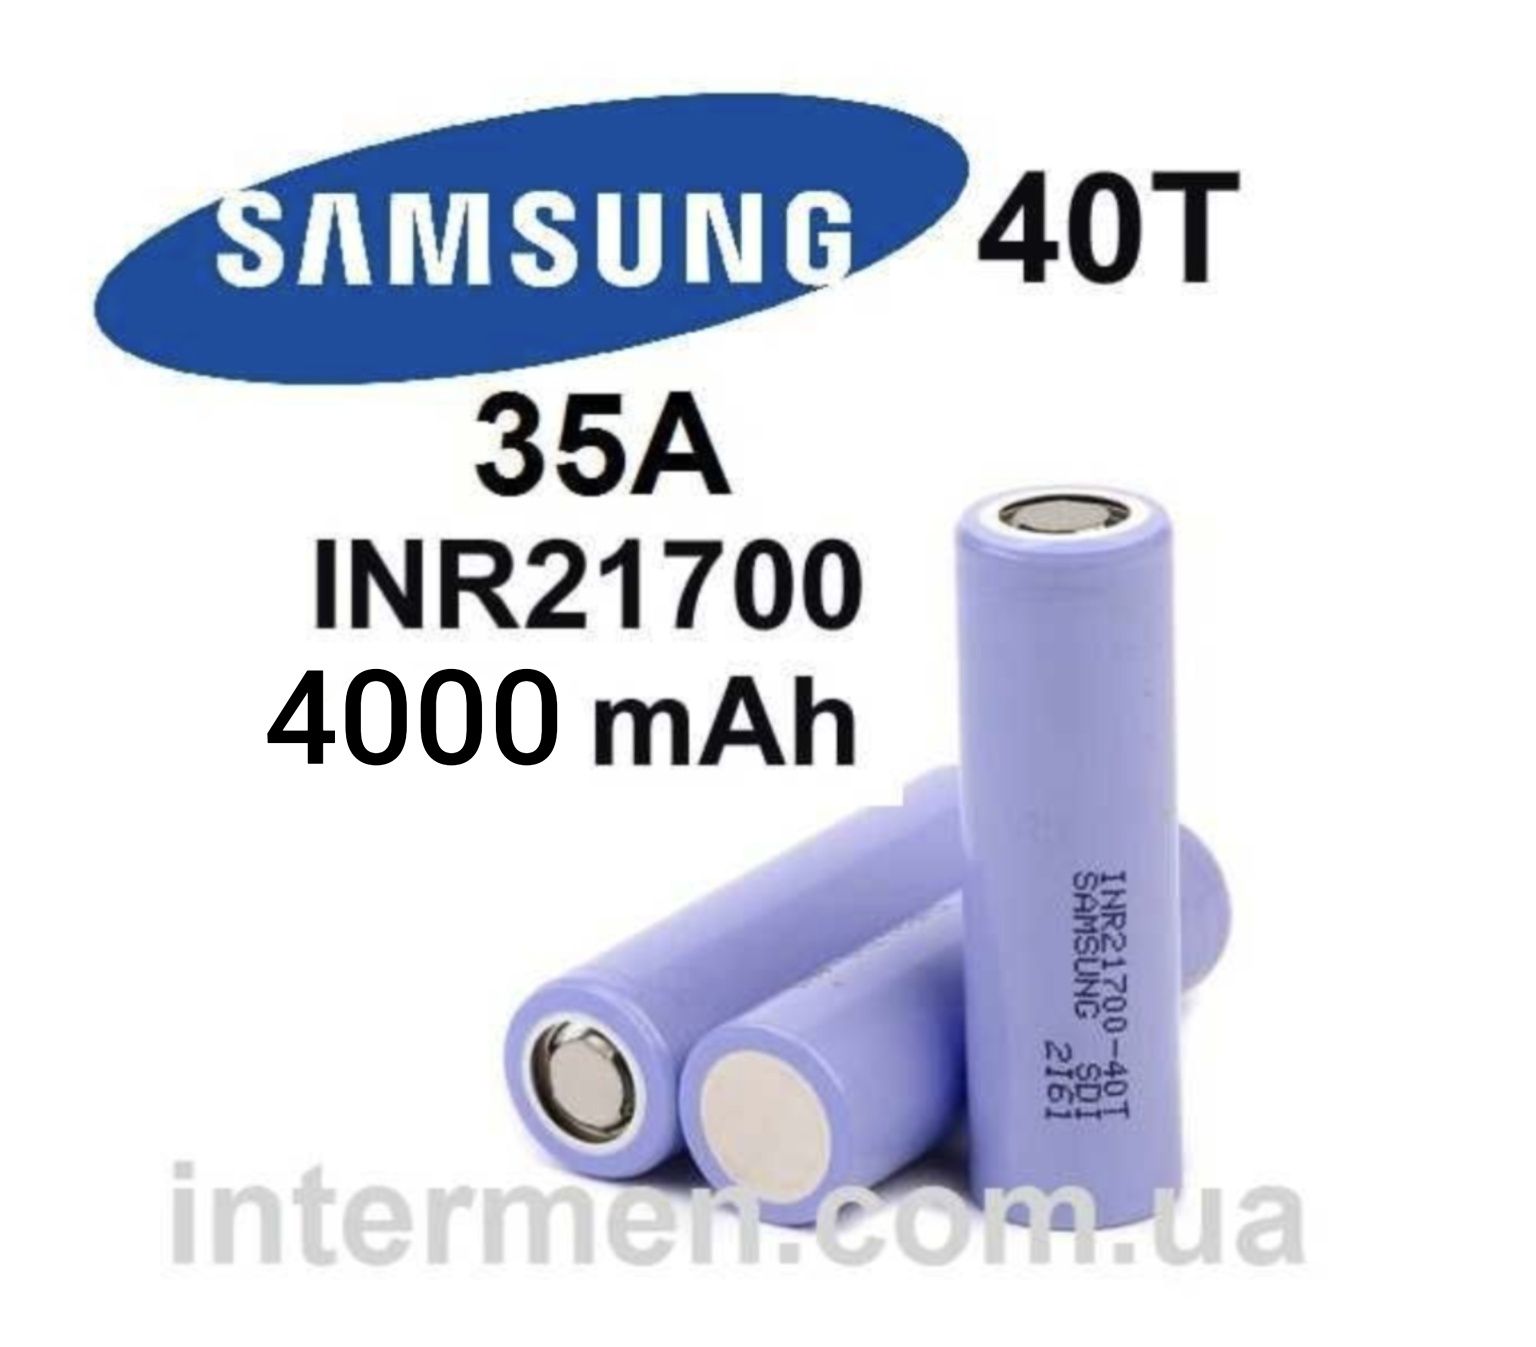 Samsung INR 21700 - 40T 35А Li-ion, аккумулятор